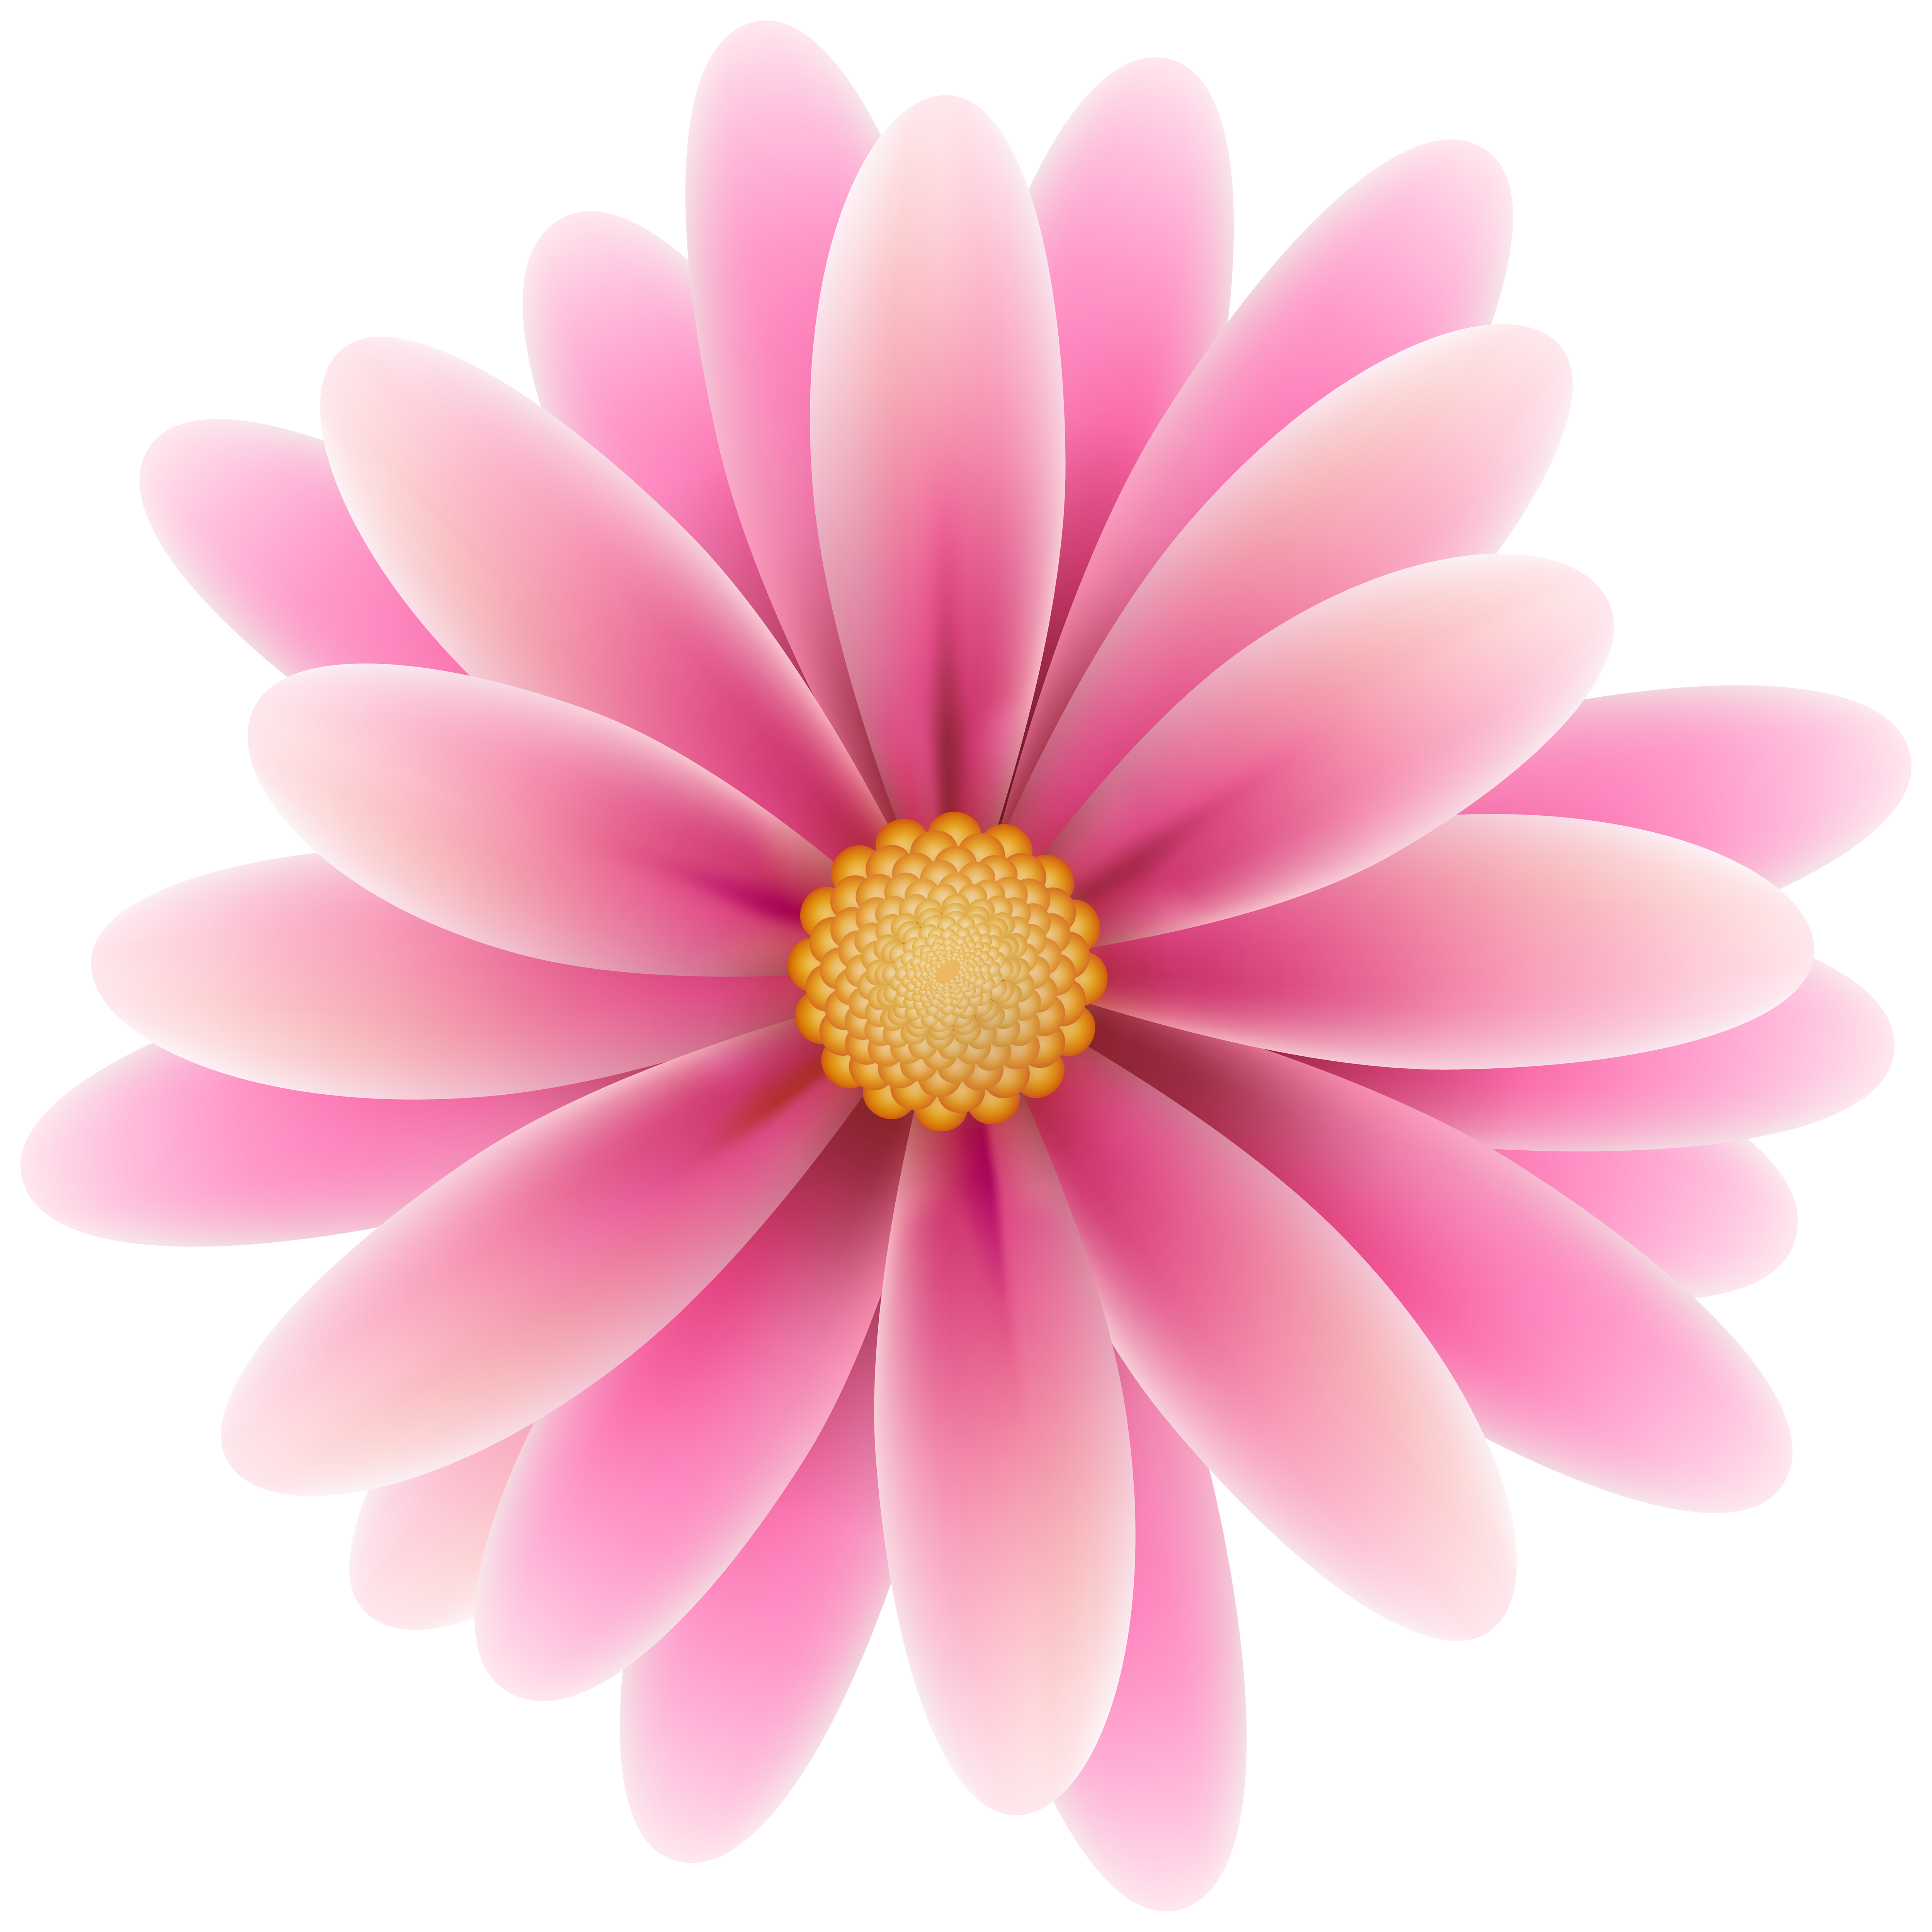 hydrangea clipart pink dandelion